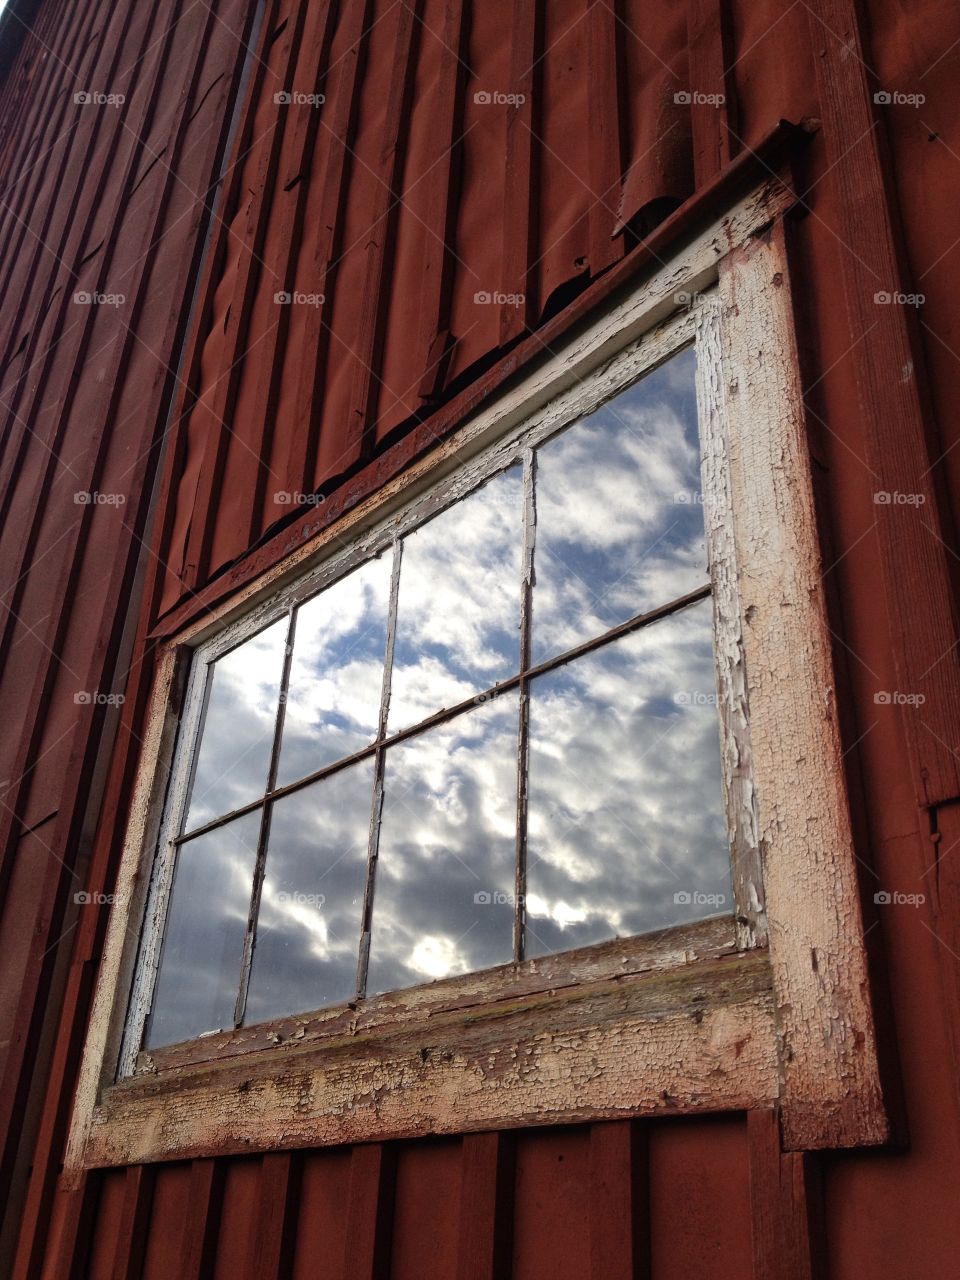 Reflection in barn window